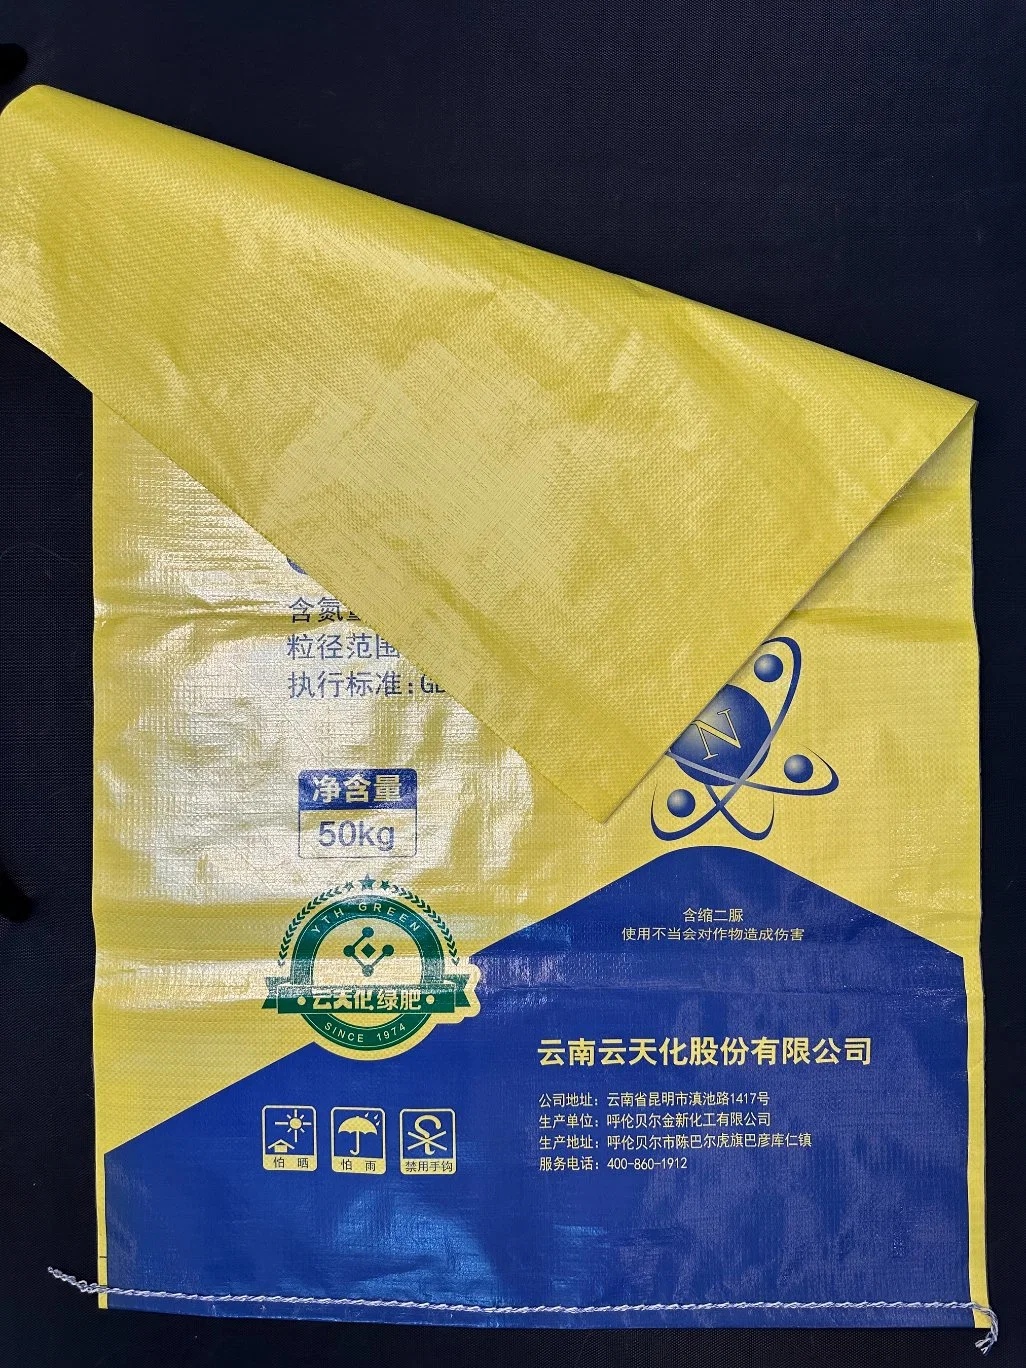 25kg Embalaje PP Bolsa de tela de saco para sembrar arroz con precios baratos